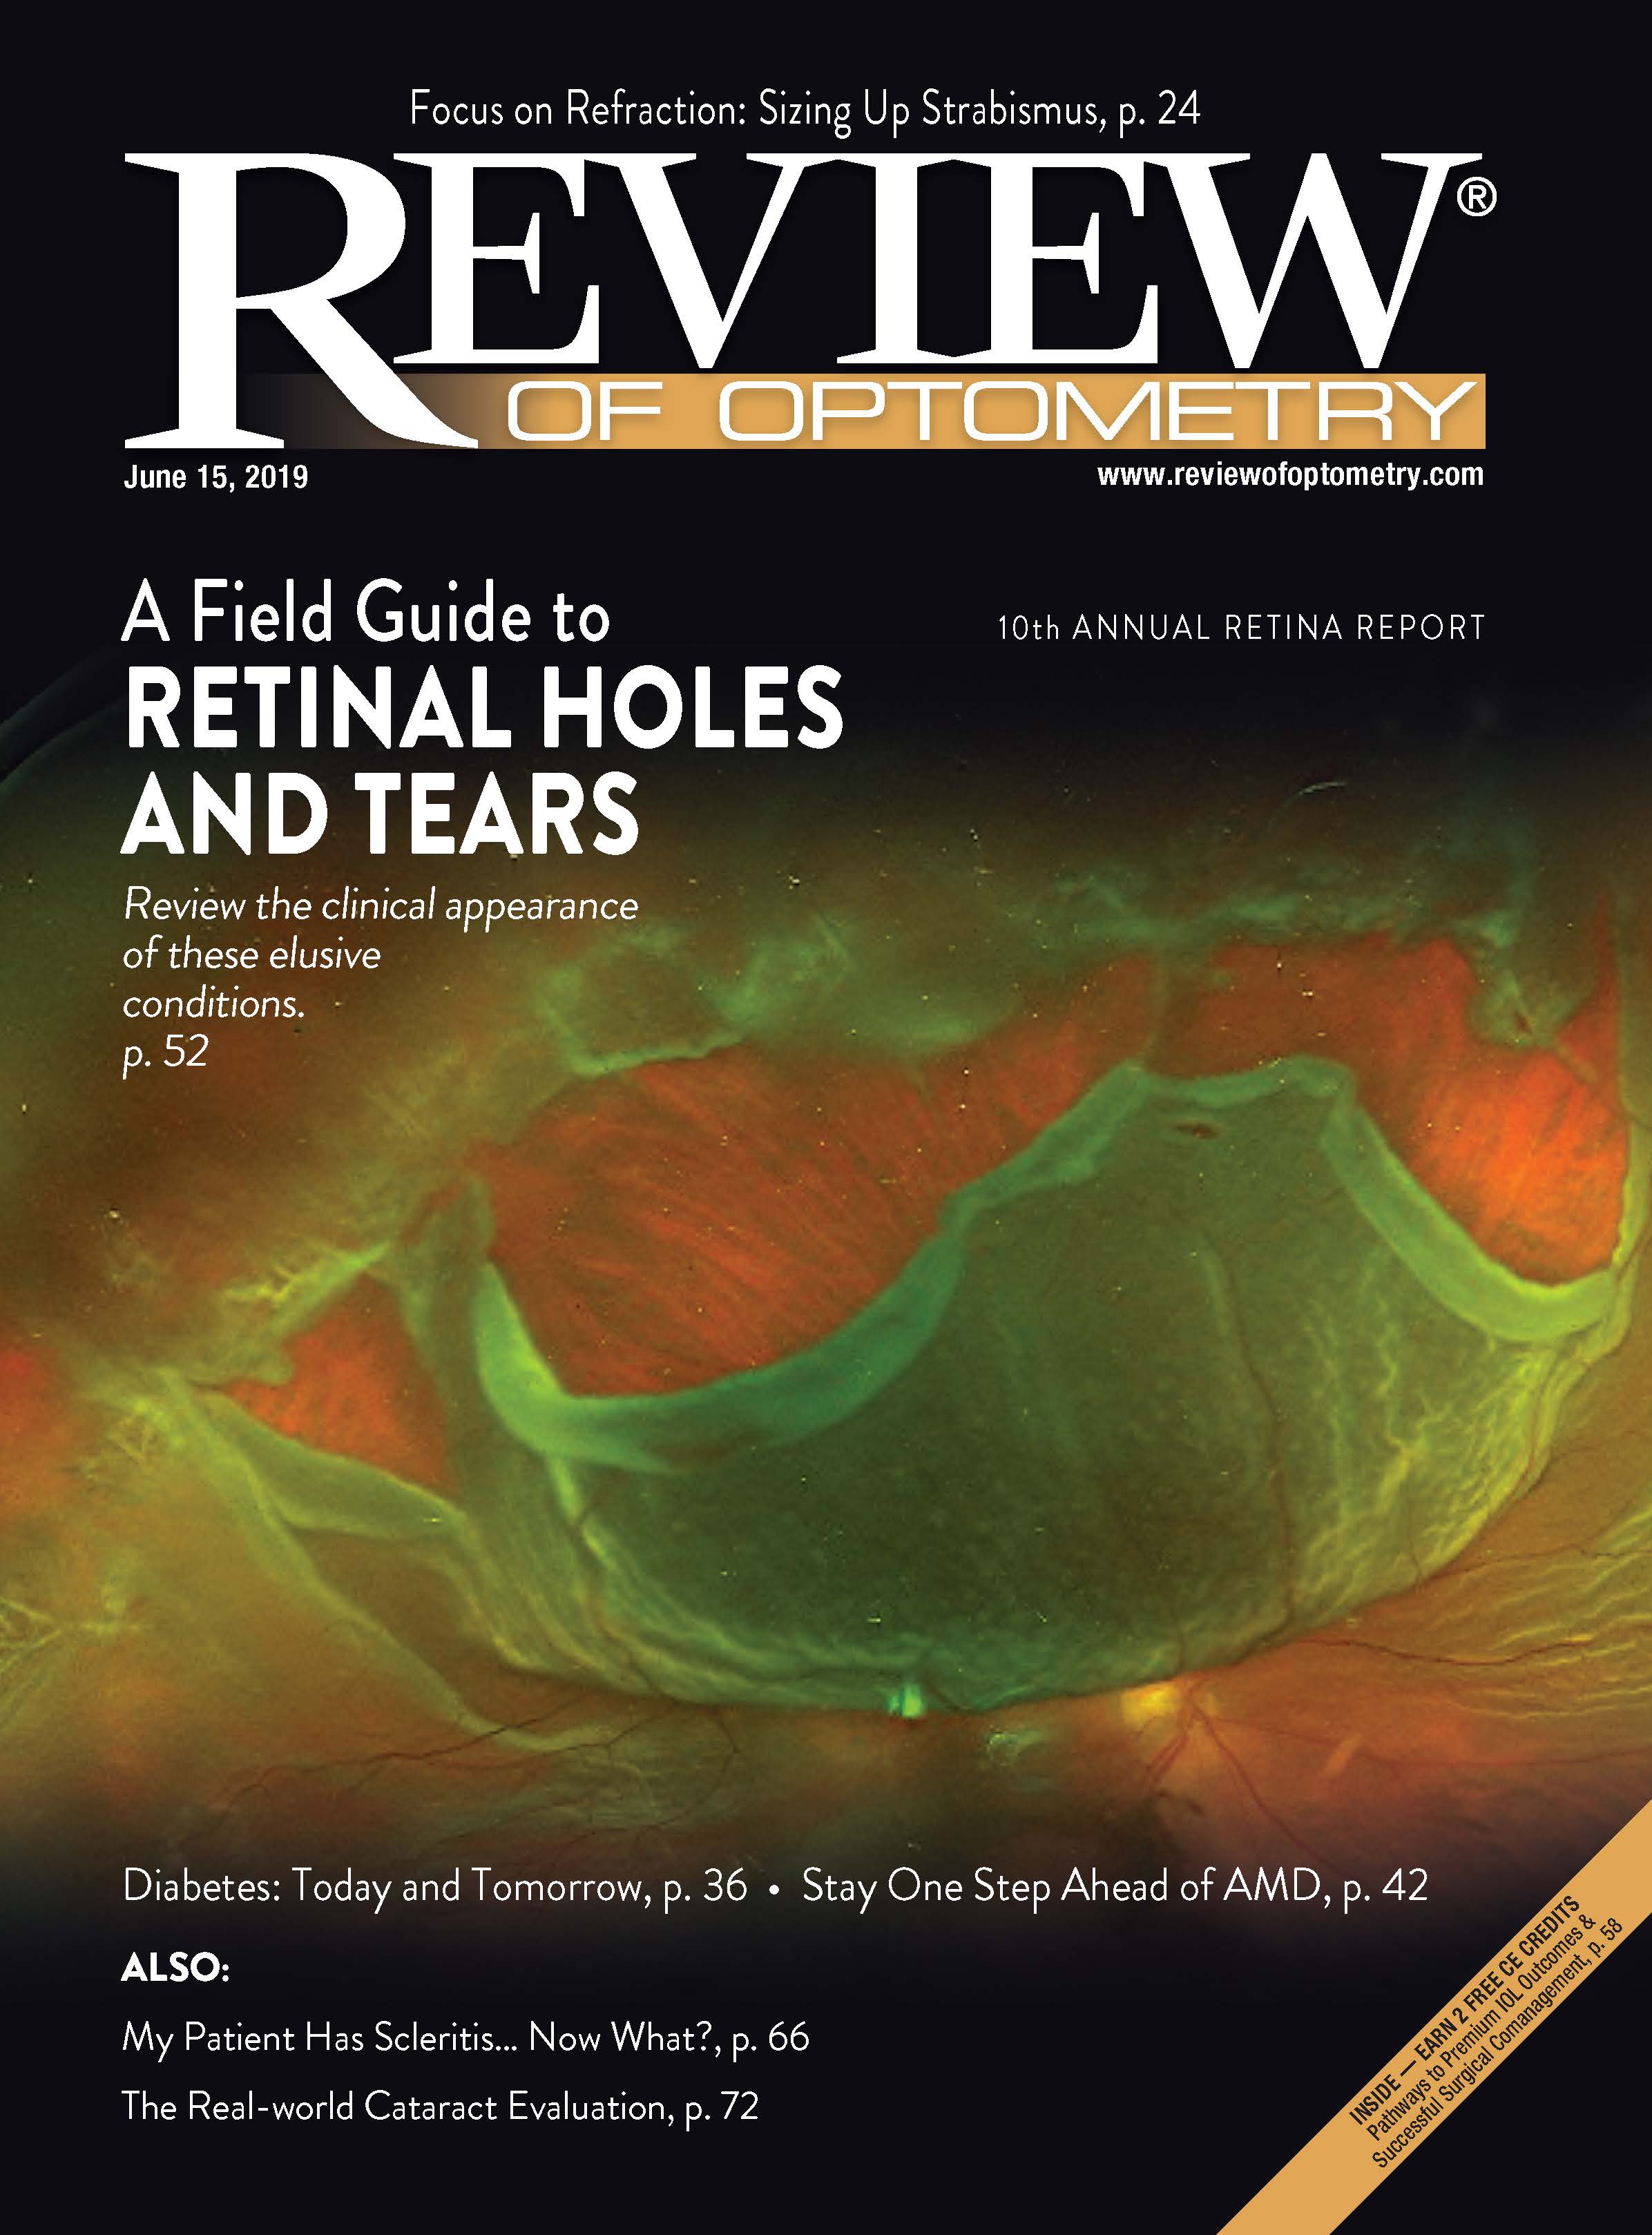 Review of Optometry June 2019 image